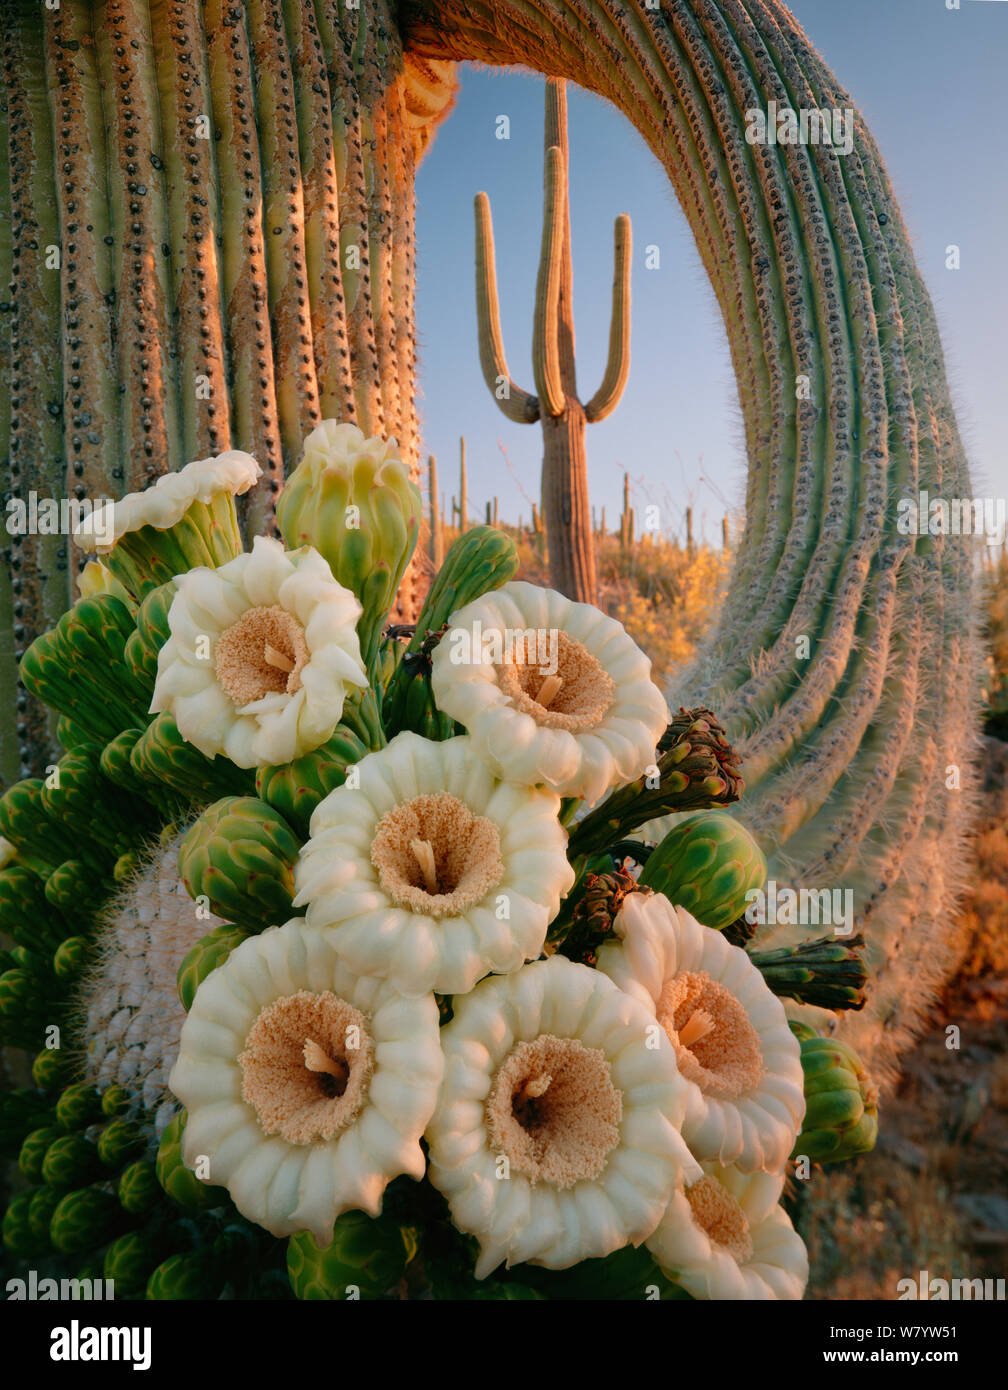 Saguaro Cactus (Carnegiea gigantea) with flower cluster emerging from the tip of its limb, Saguaro National Park, Arizona, USA. Stock Photo